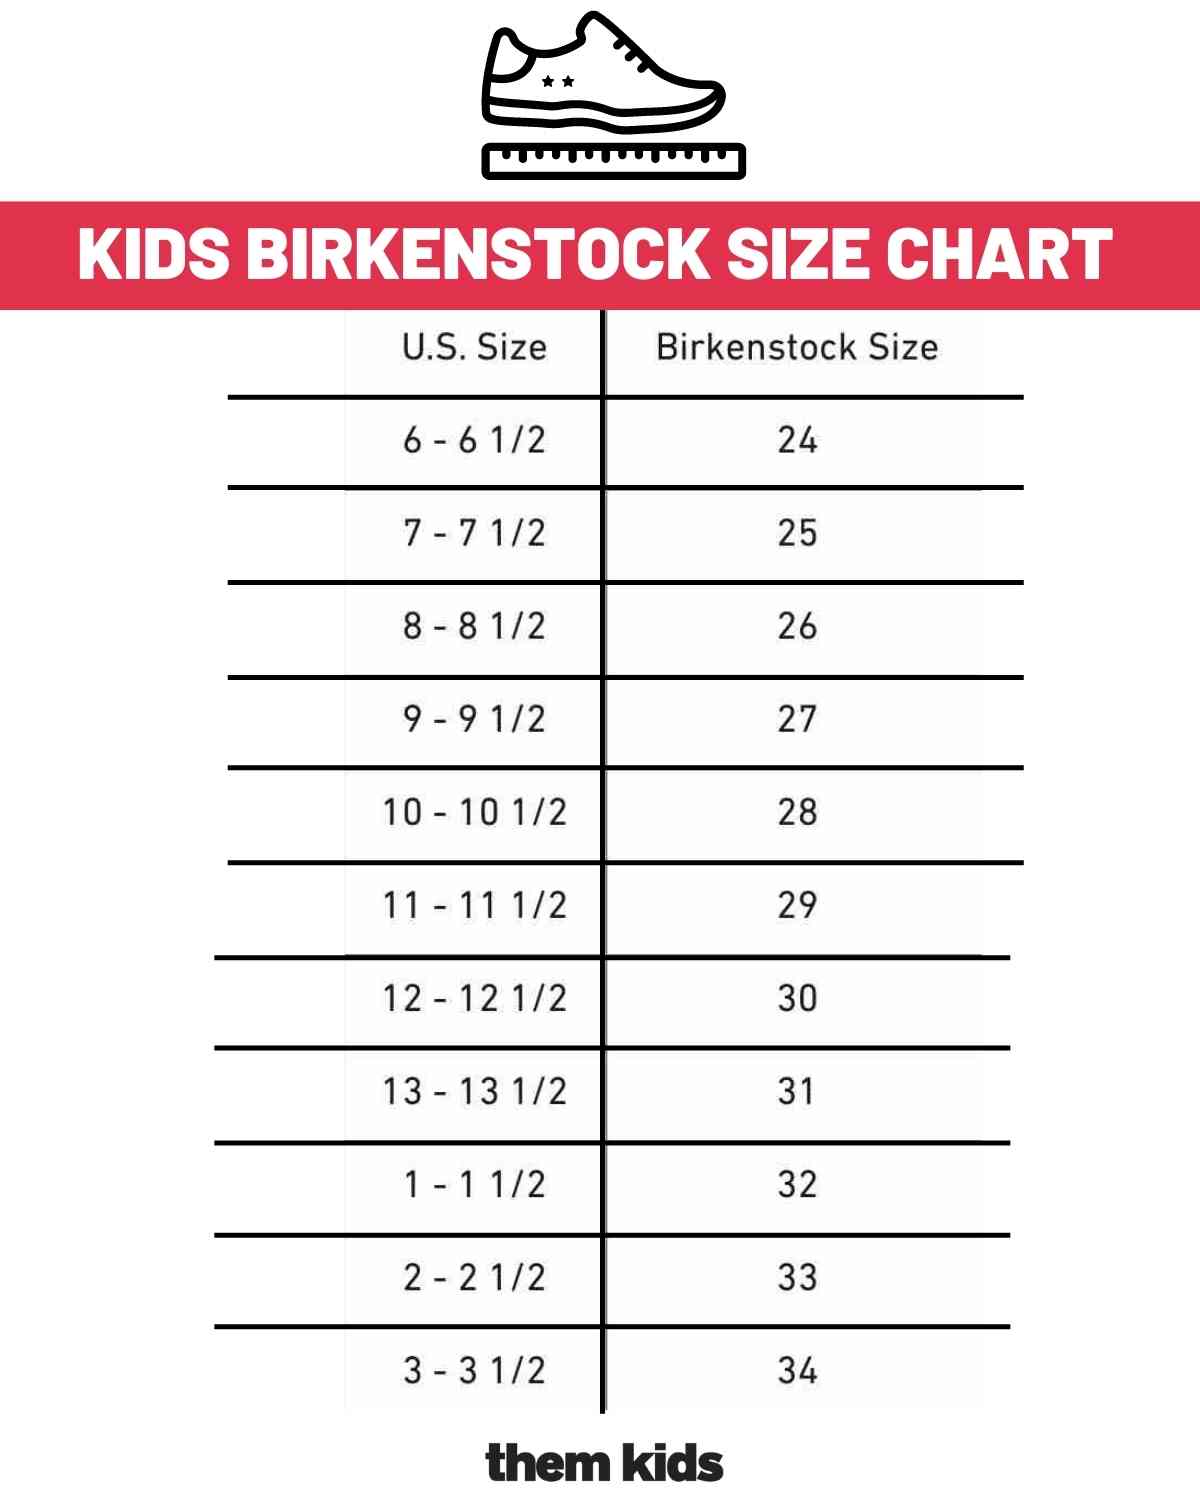 Birkenstock Size Chart For Kids